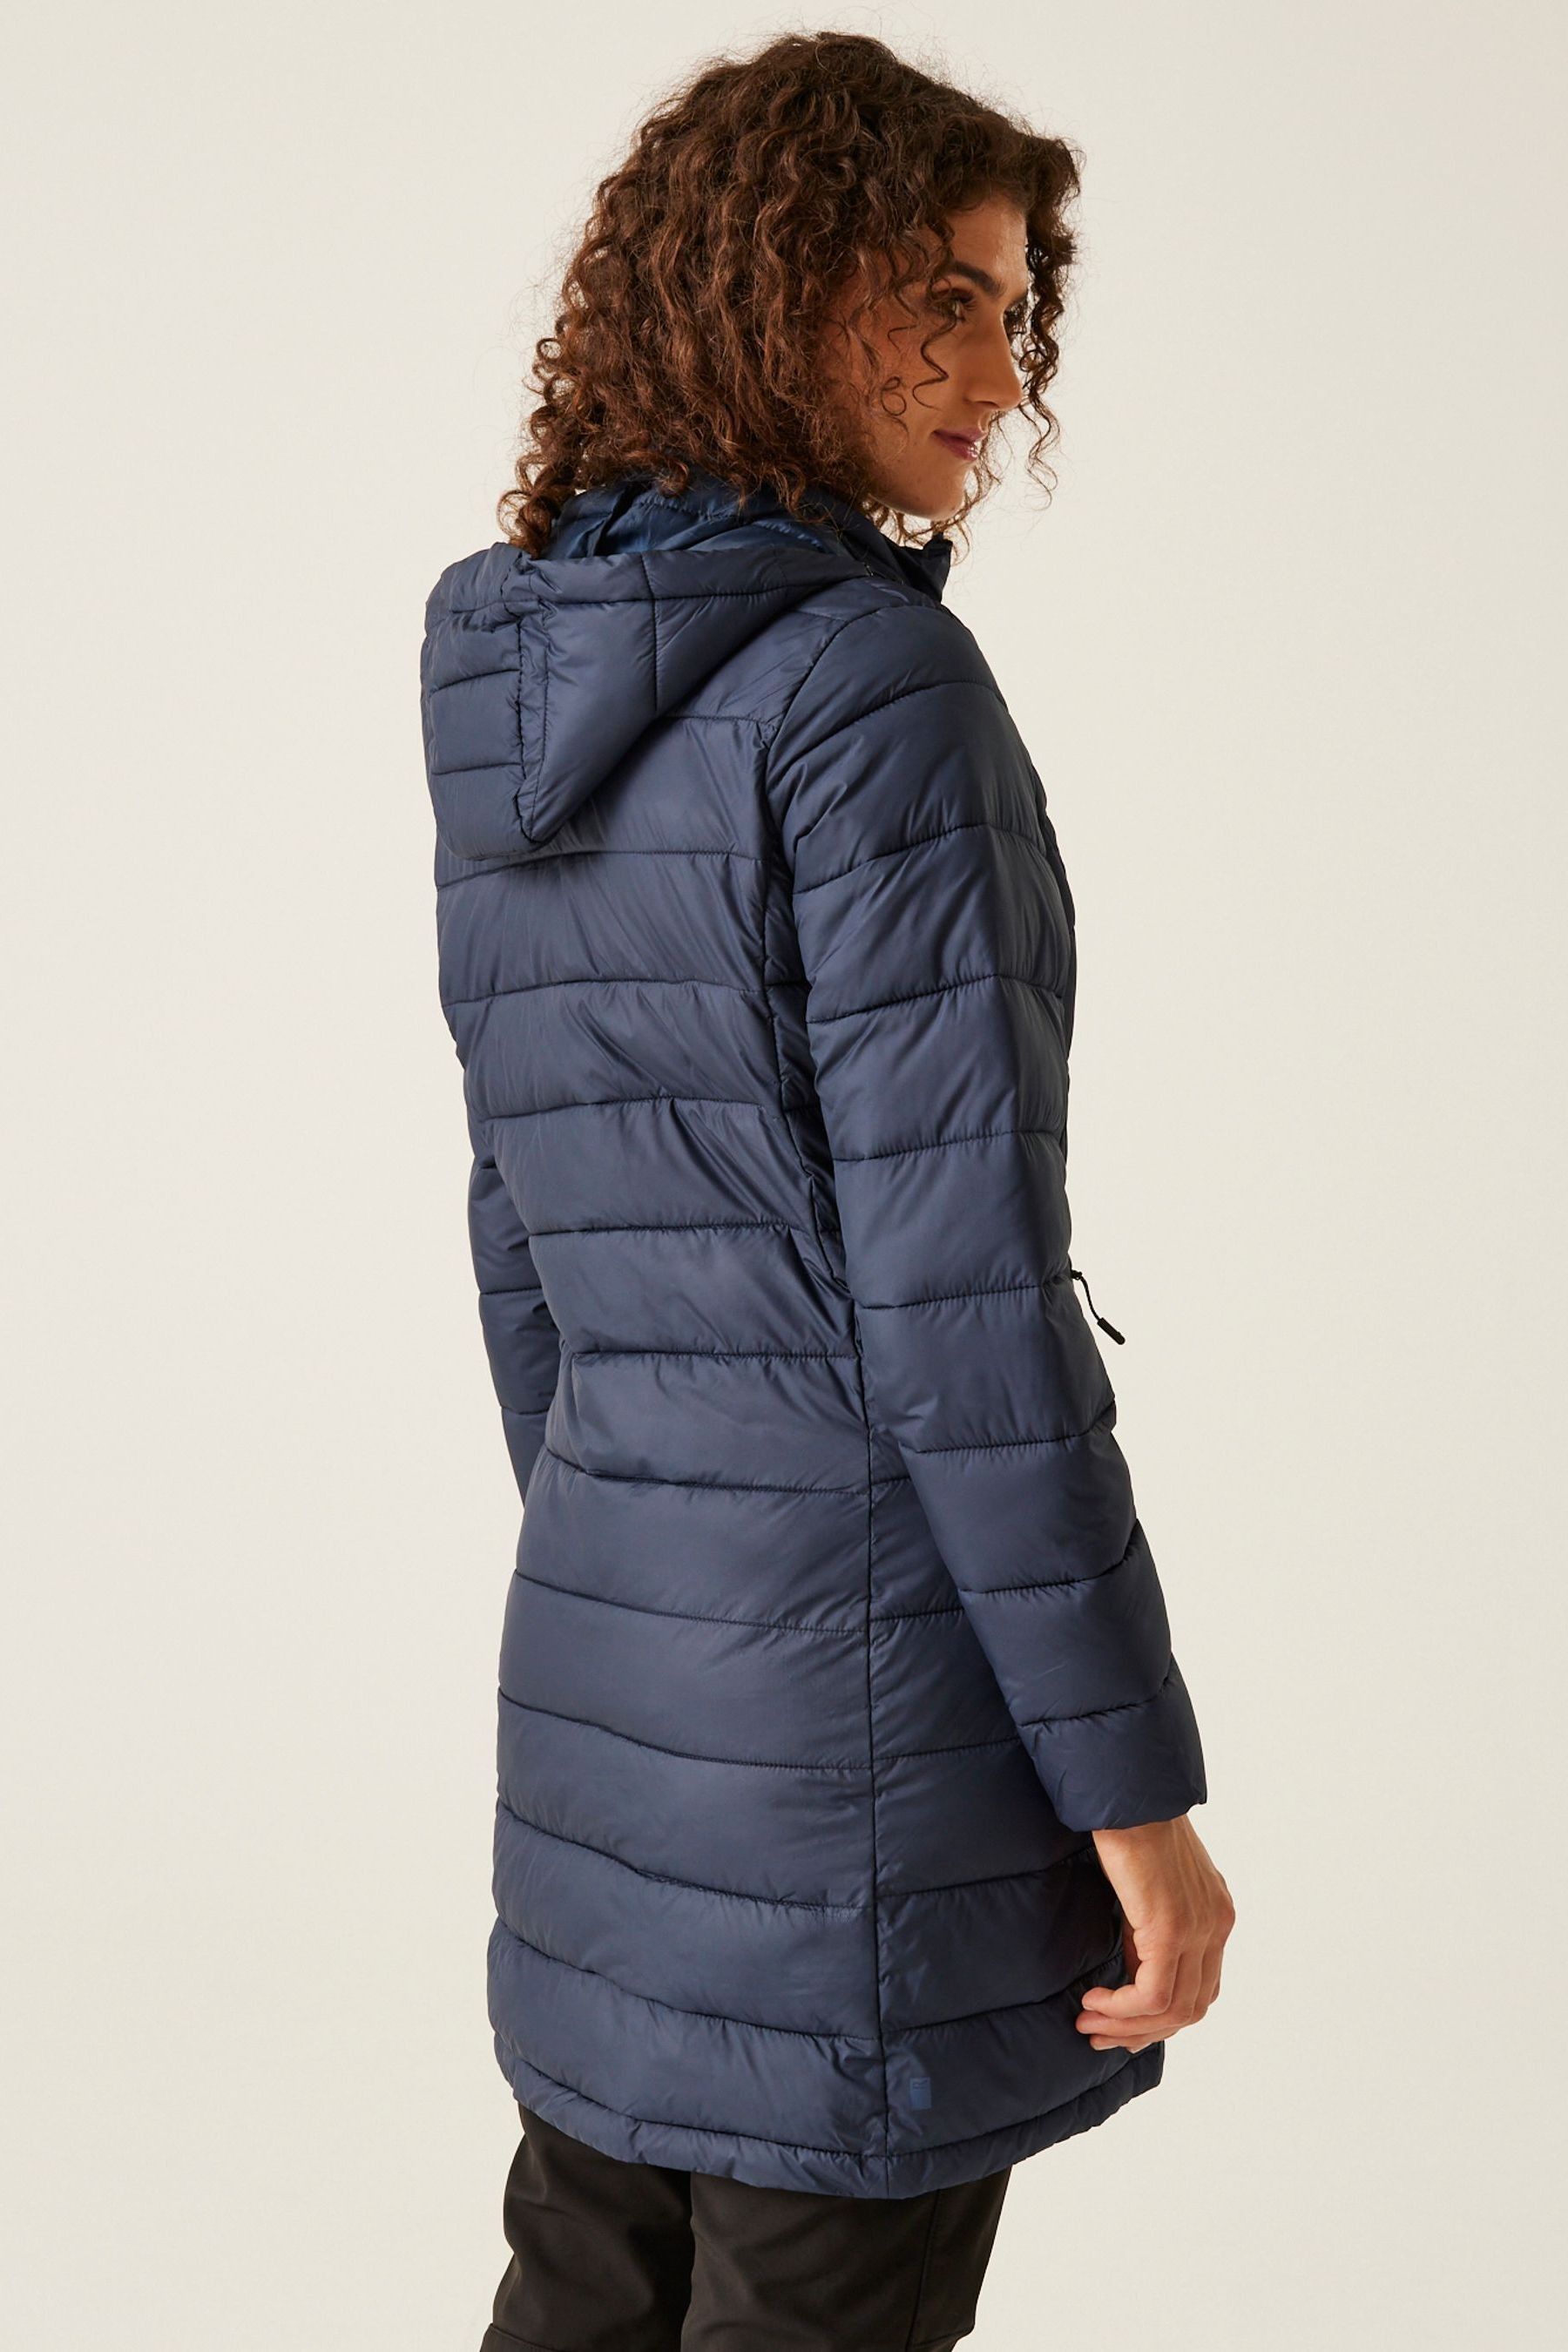 Buy Regatta Blue Starler Insulated Jacket from the Next UK online shop